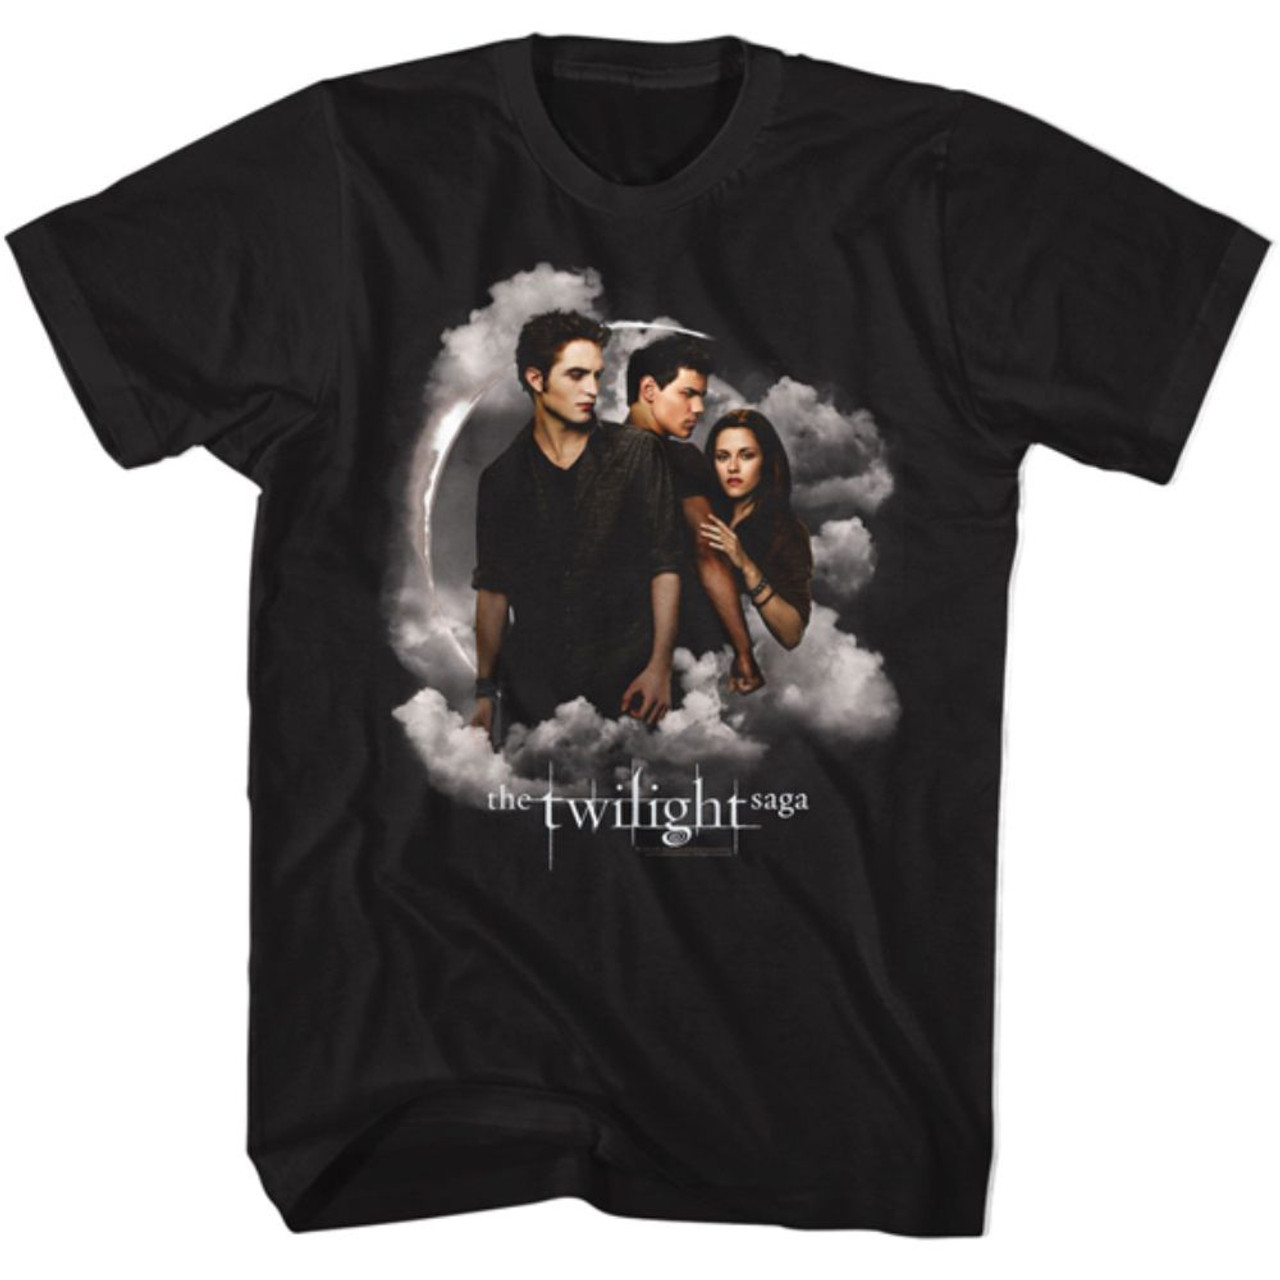 The Twilight Saga T-Shirt with Edward, Jacob, and Bella 